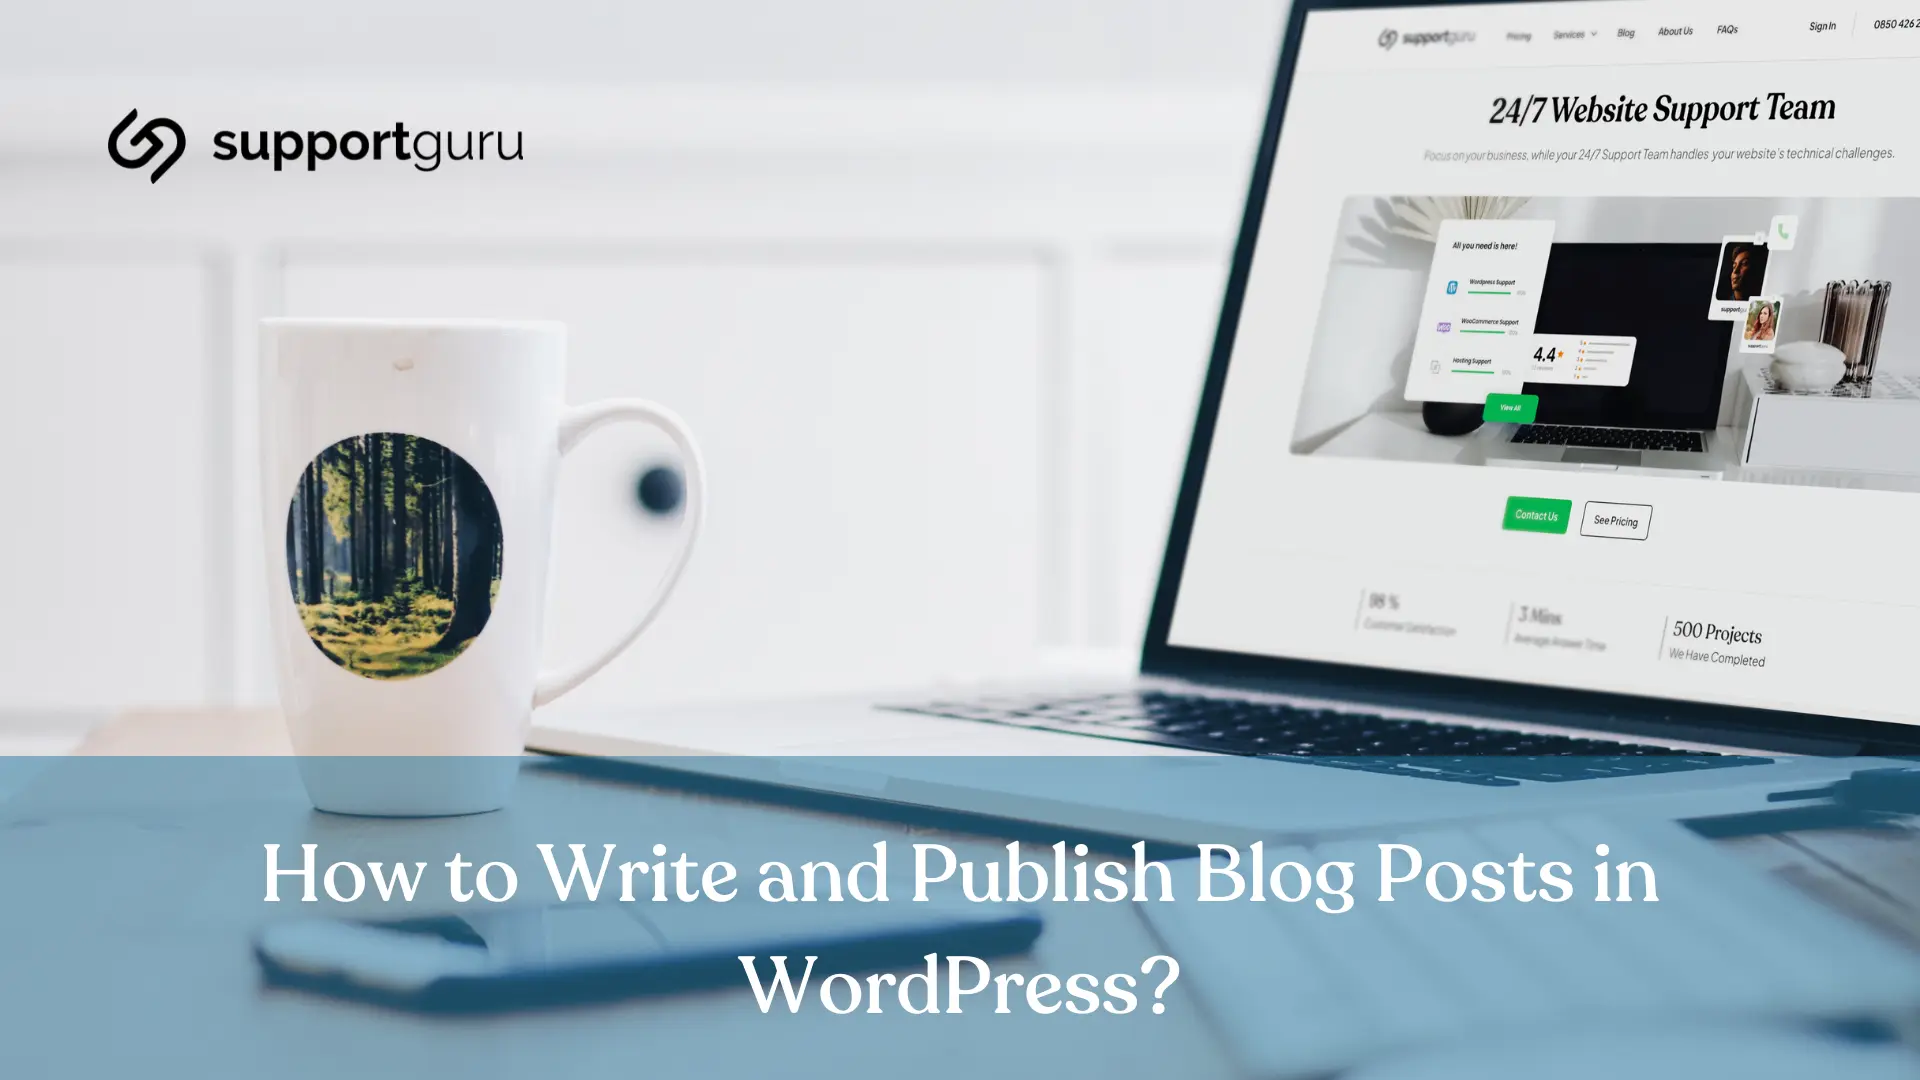 Write blog posts for WordPress, How to Write Blogs for WordPress, WordPress Blog, Publish WordPress Blog Posts